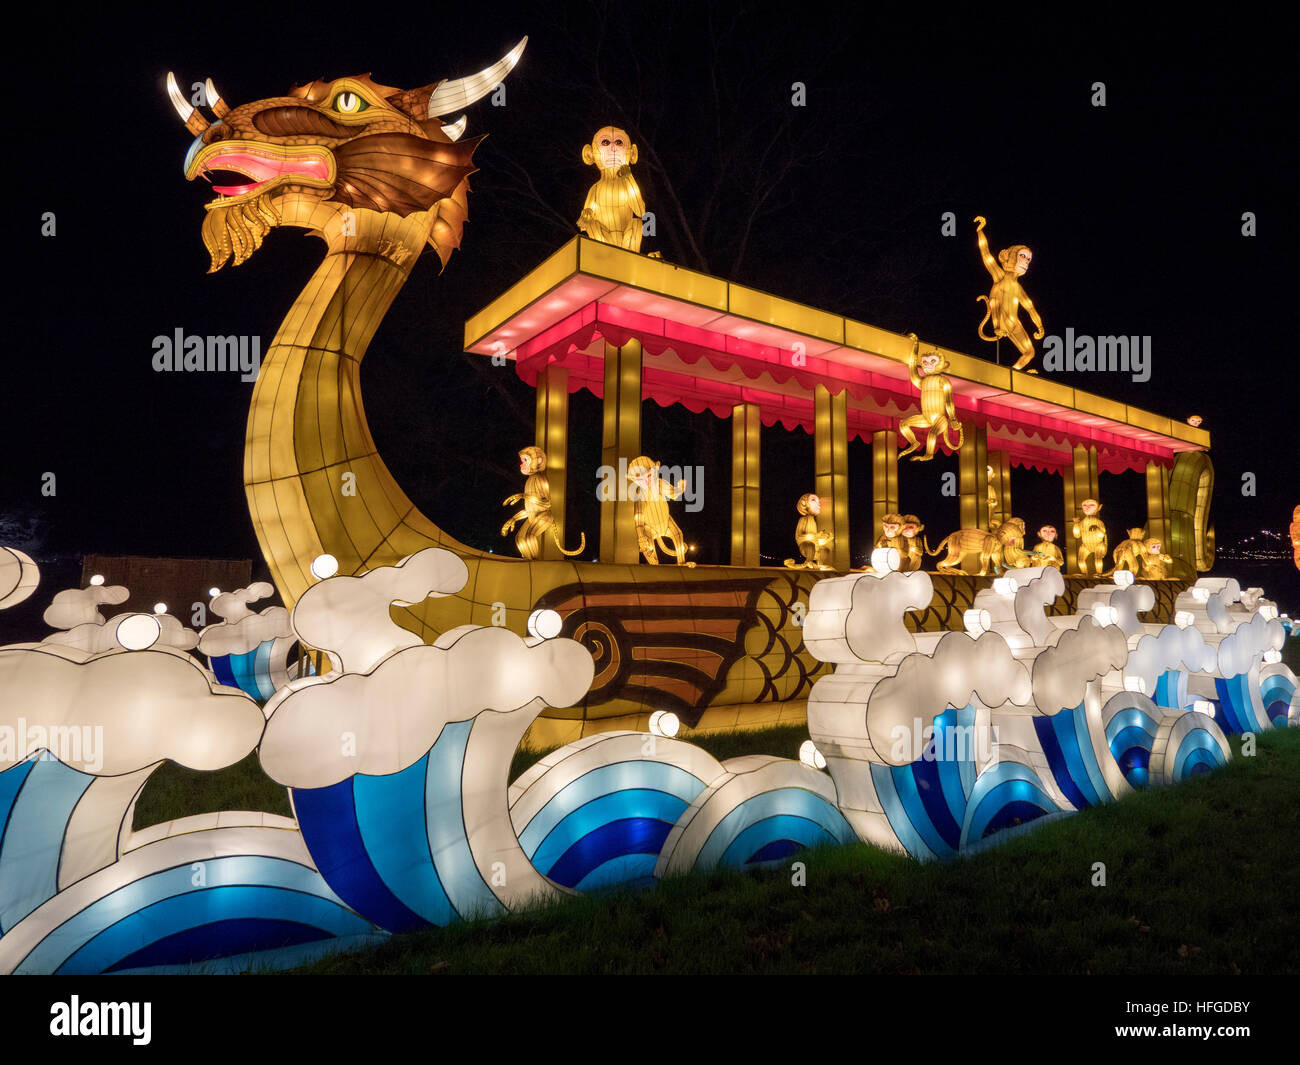 Chinese Lantern Festival at Longleat House, nr Warminster, England, Uk Stock Photo